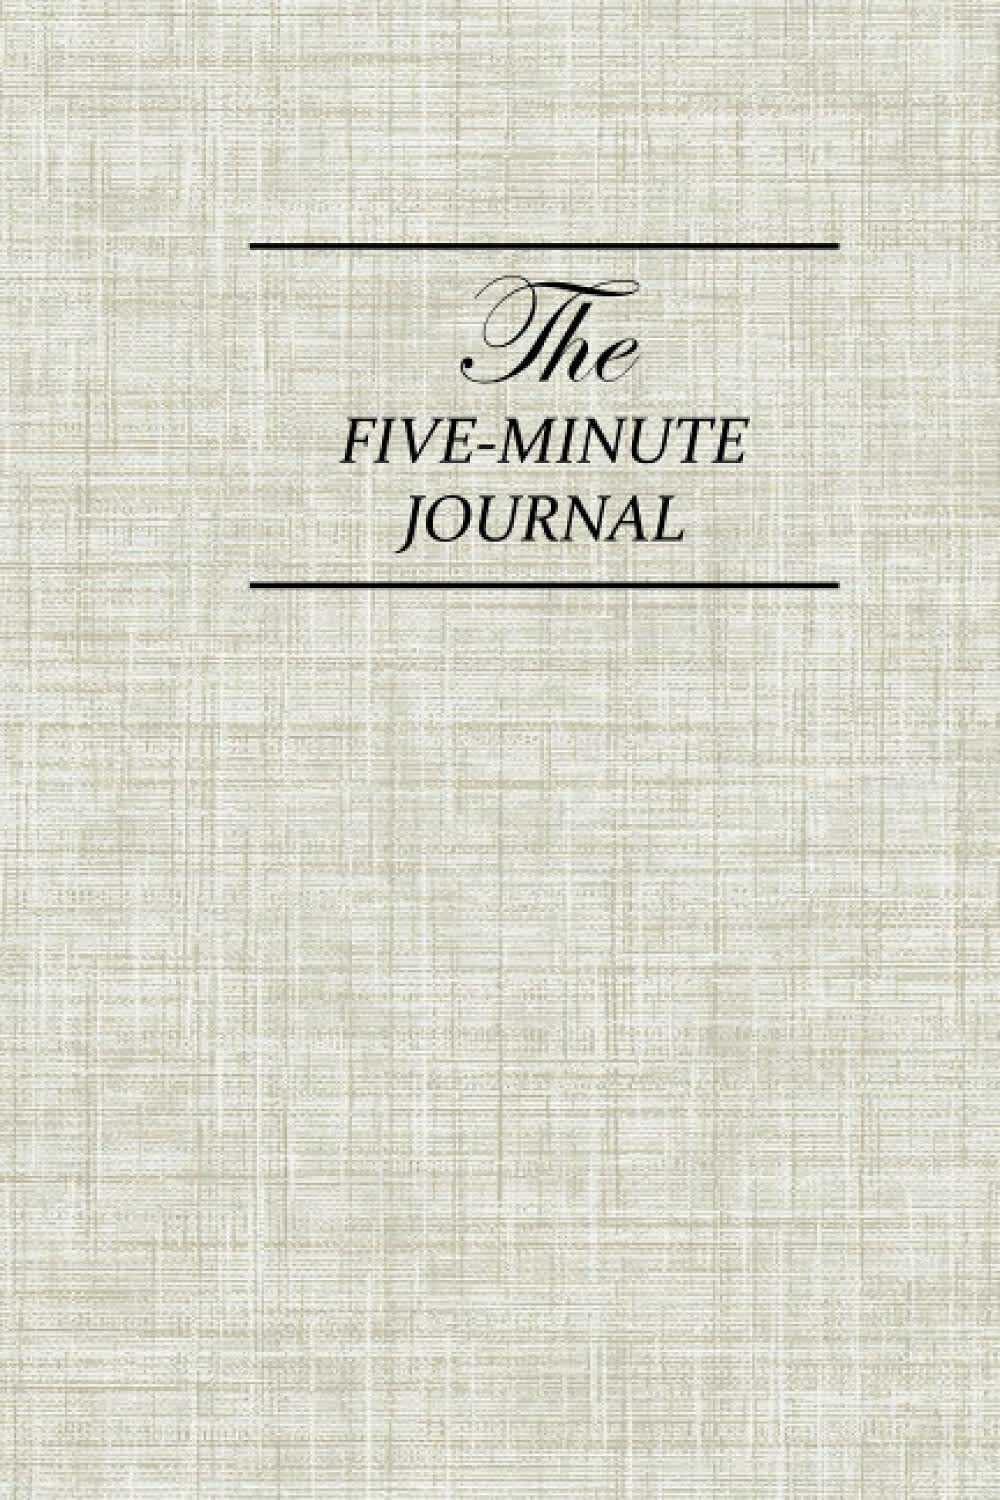 Live Life Your OUAI: Limited Edition OUAI X Five Minute Journal